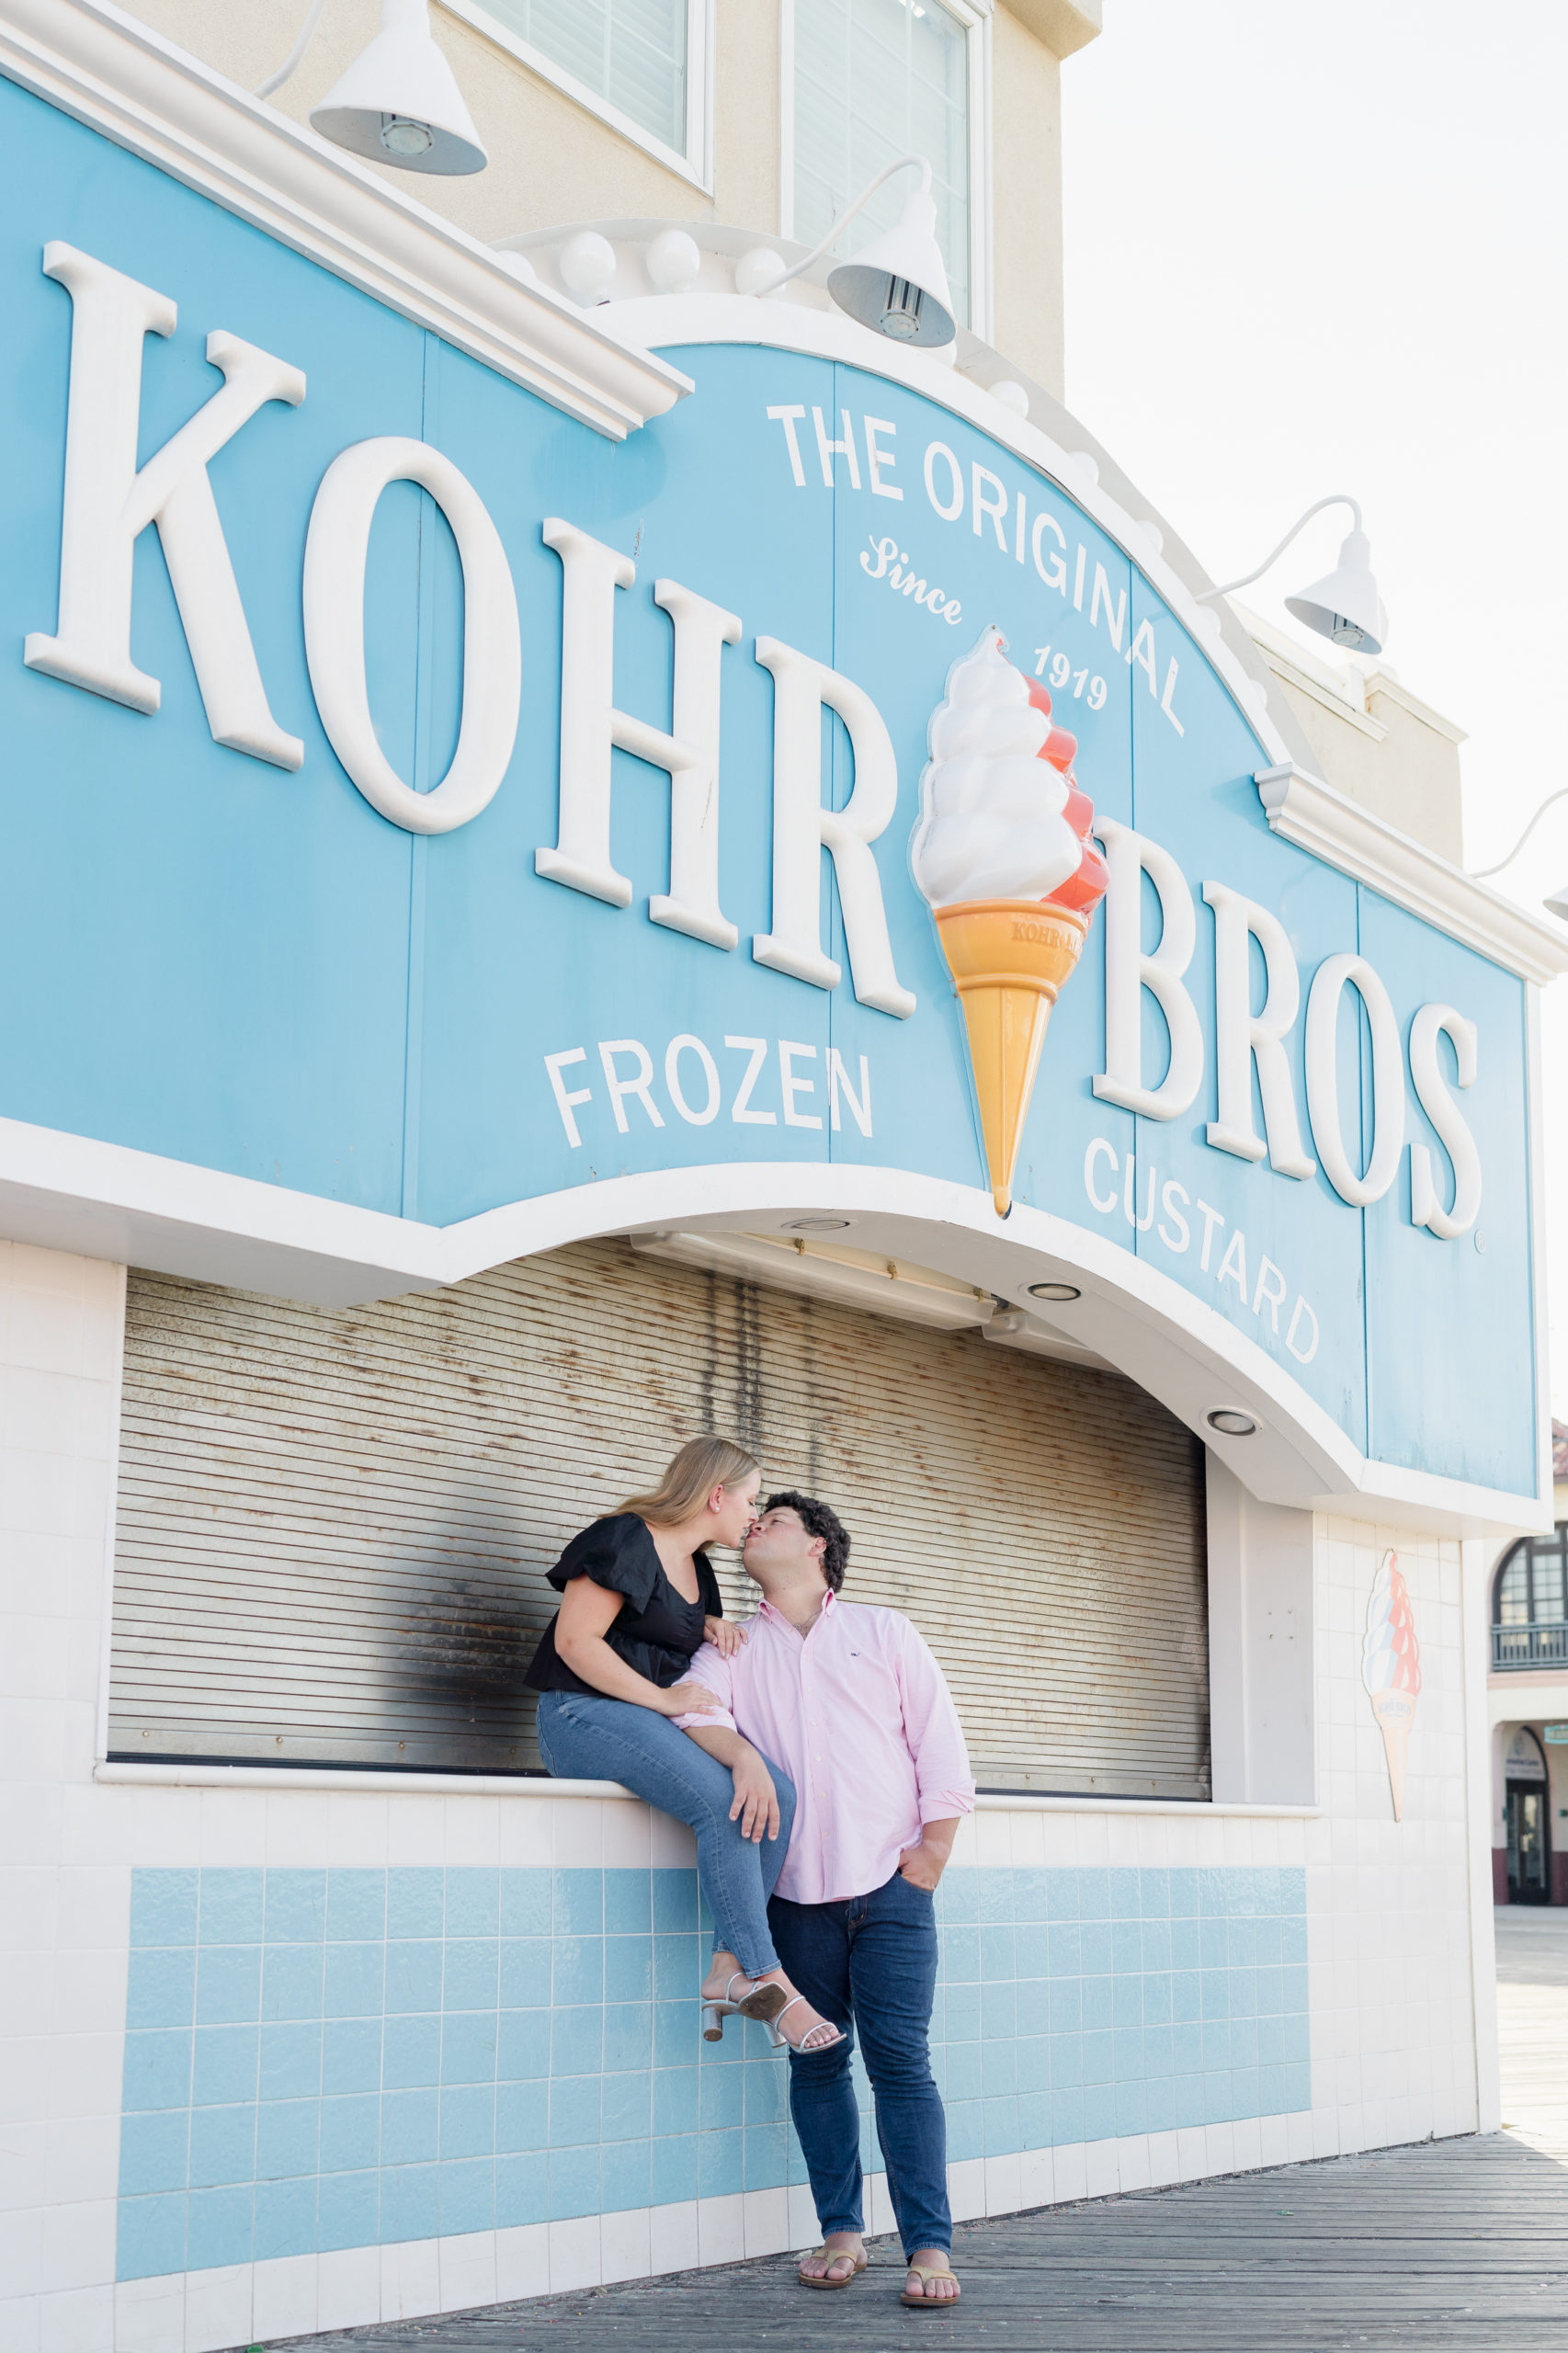 A couple kisses outside Kohr Bros by Ocean City NJ Engagement Photographer Courtney Landrum.